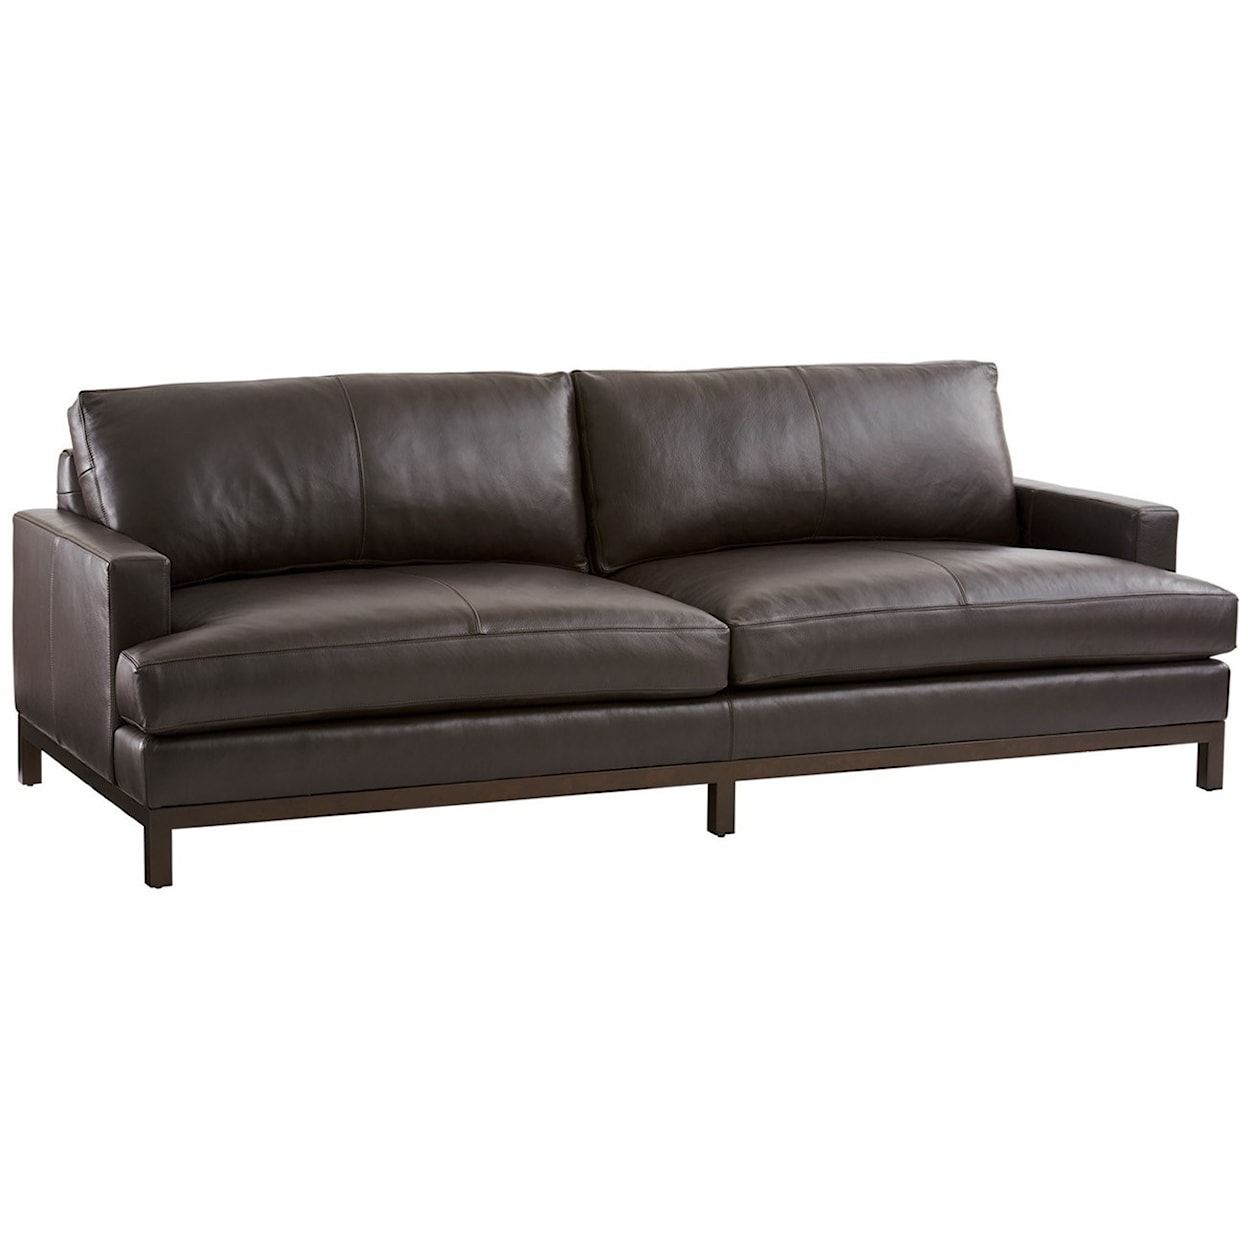 Barclay Butera Barclay Butera Upholstery Horizon Sofa w/ Dark Brown Leather & Bronze